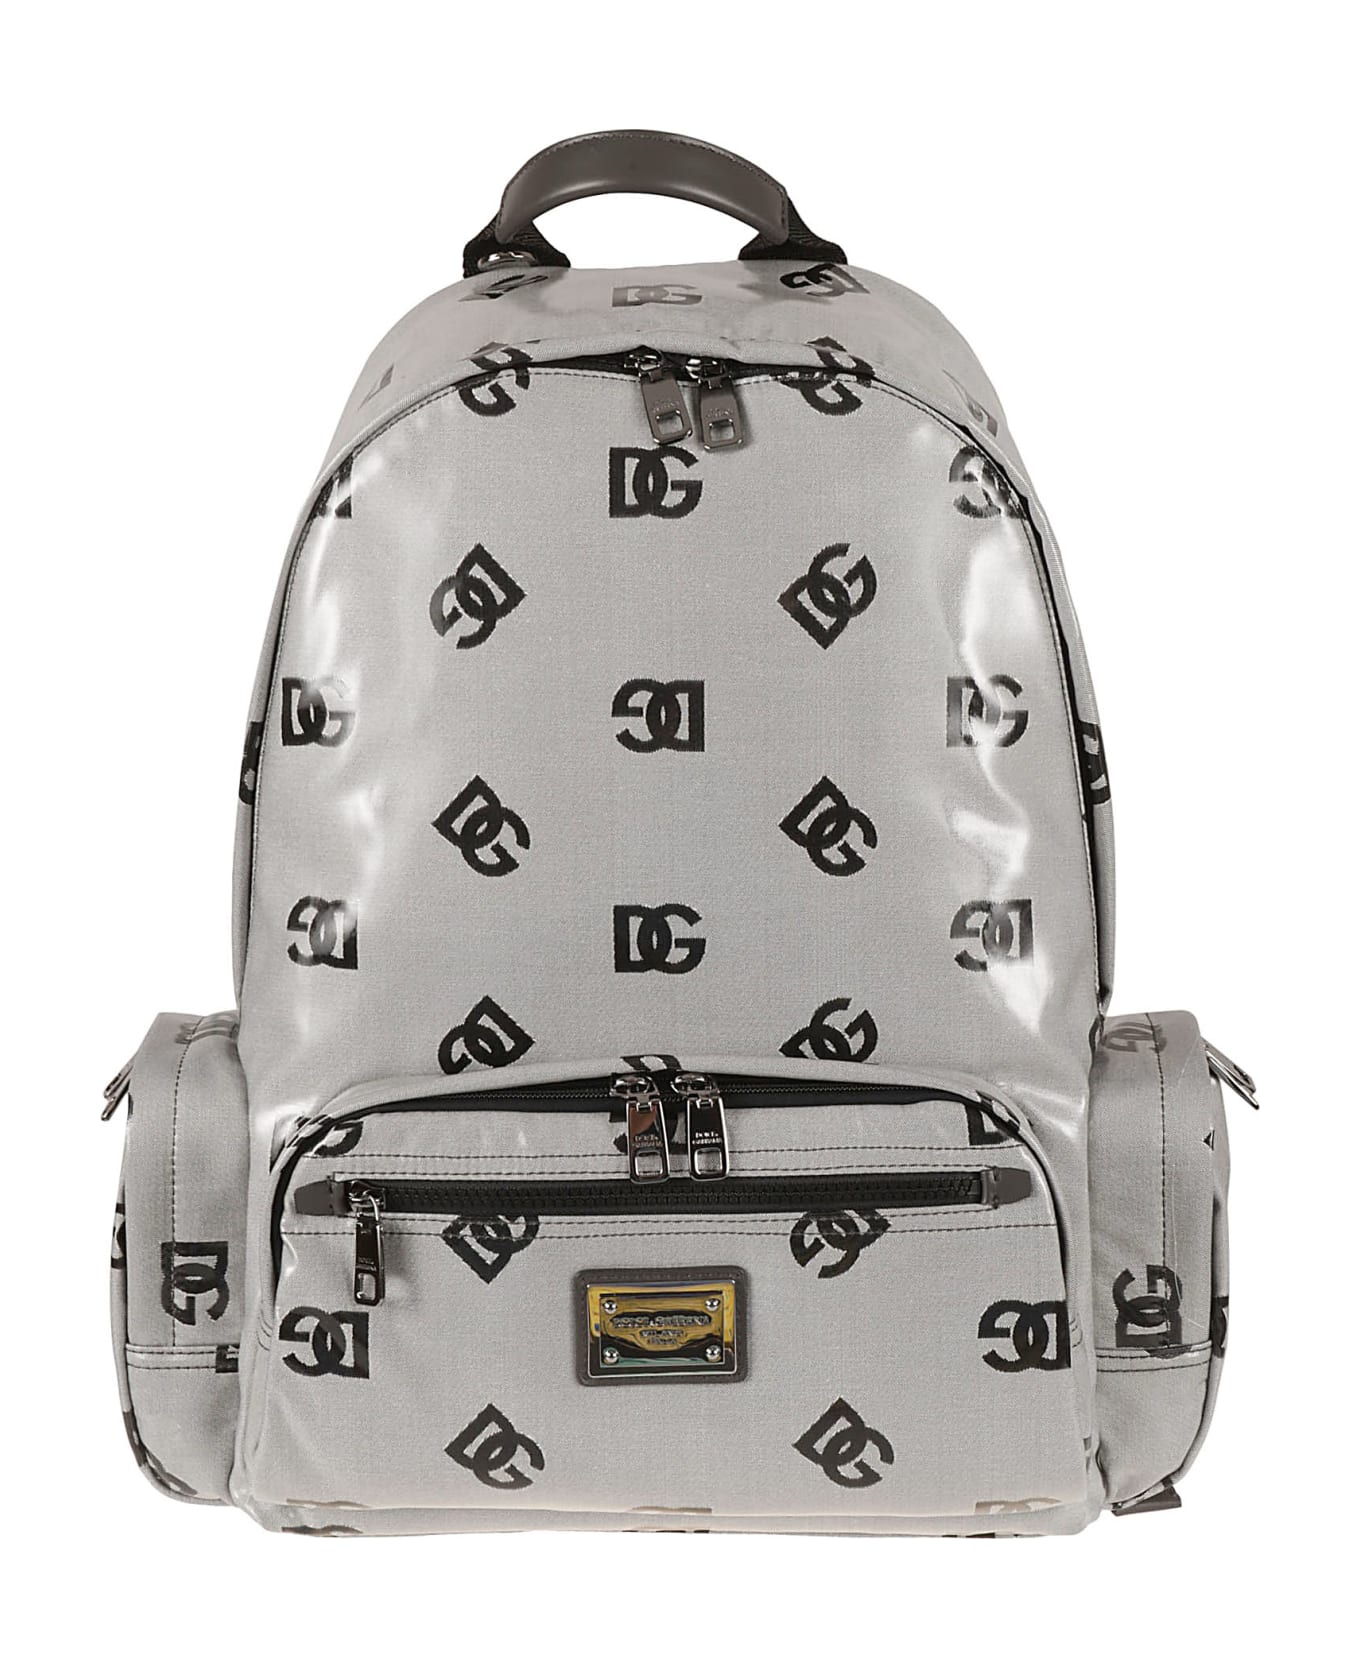 Dolce & Gabbana Logo Print Backpack - Grey/white